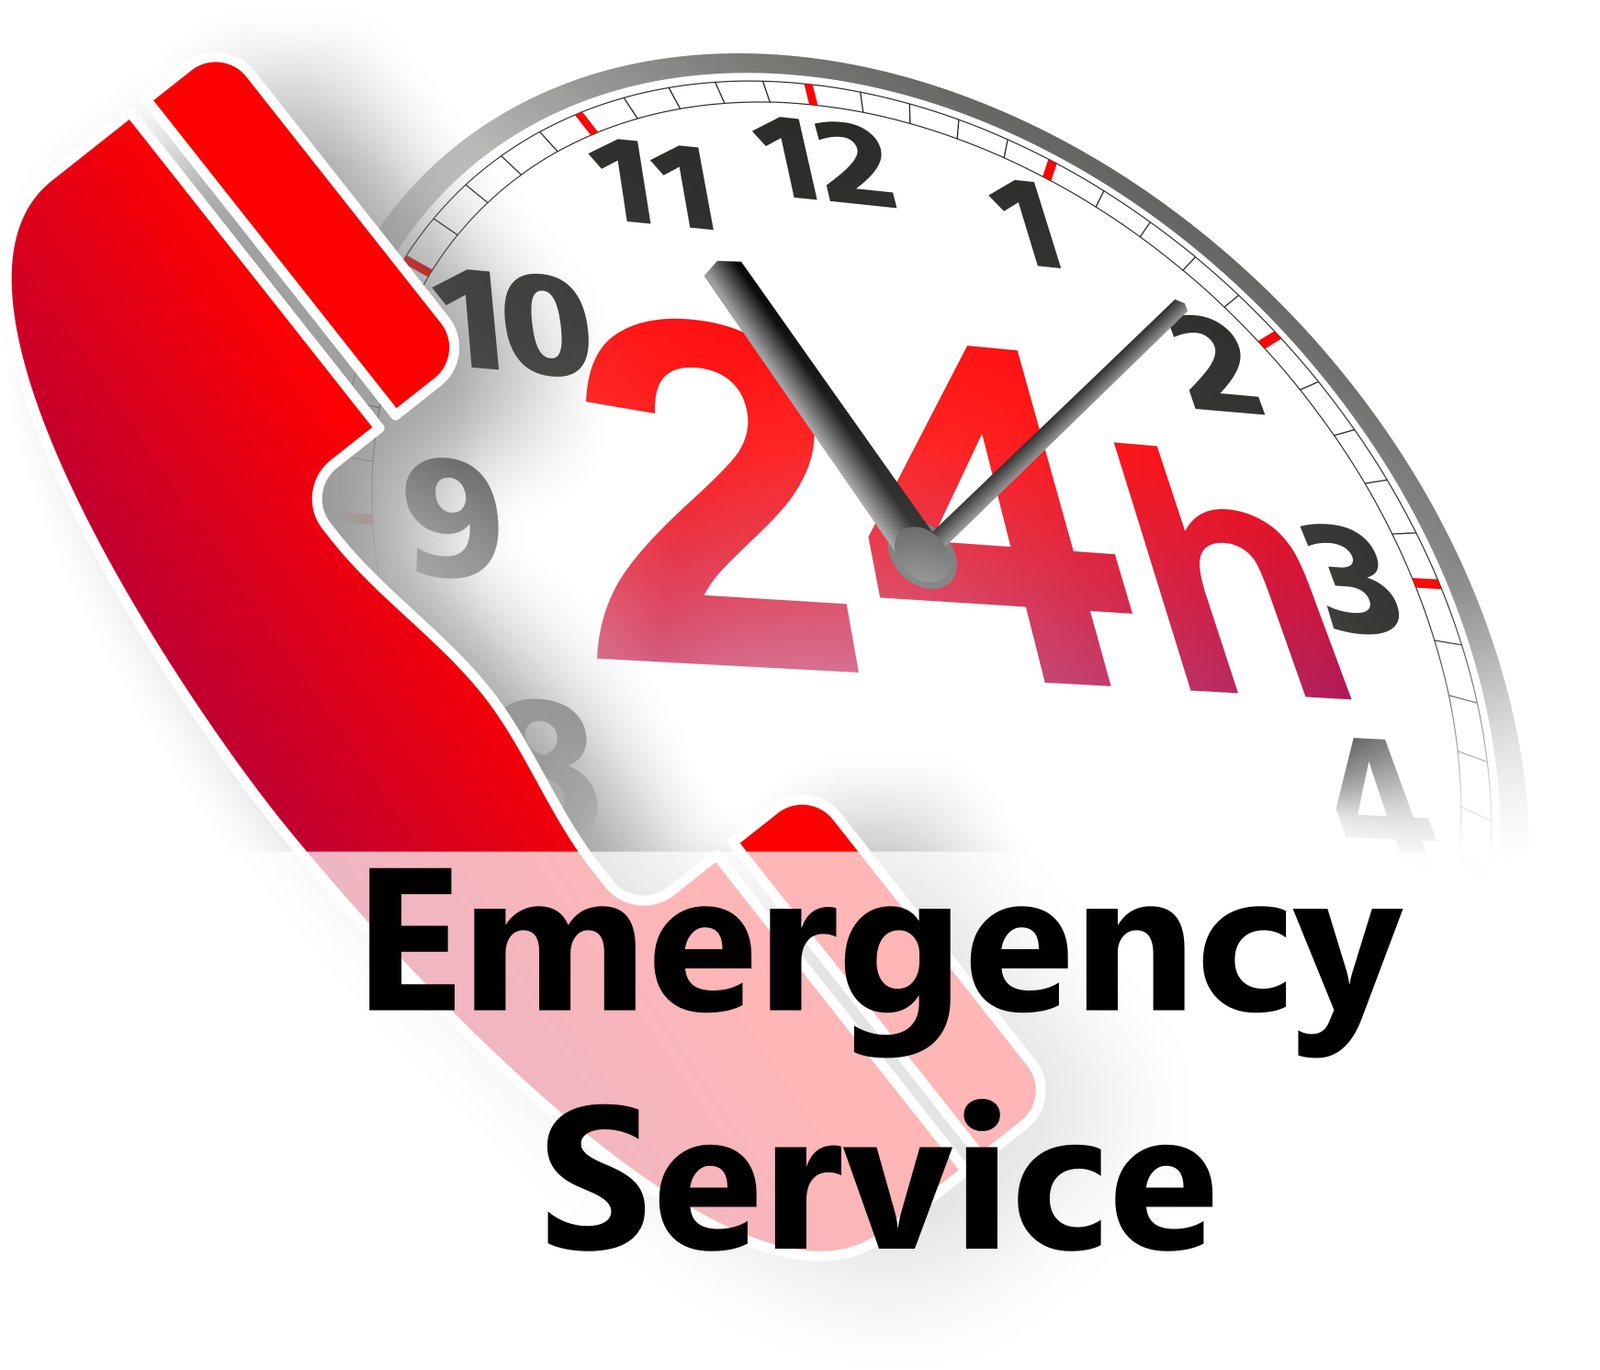 24 hour emergency heating service in Edmonton, AB